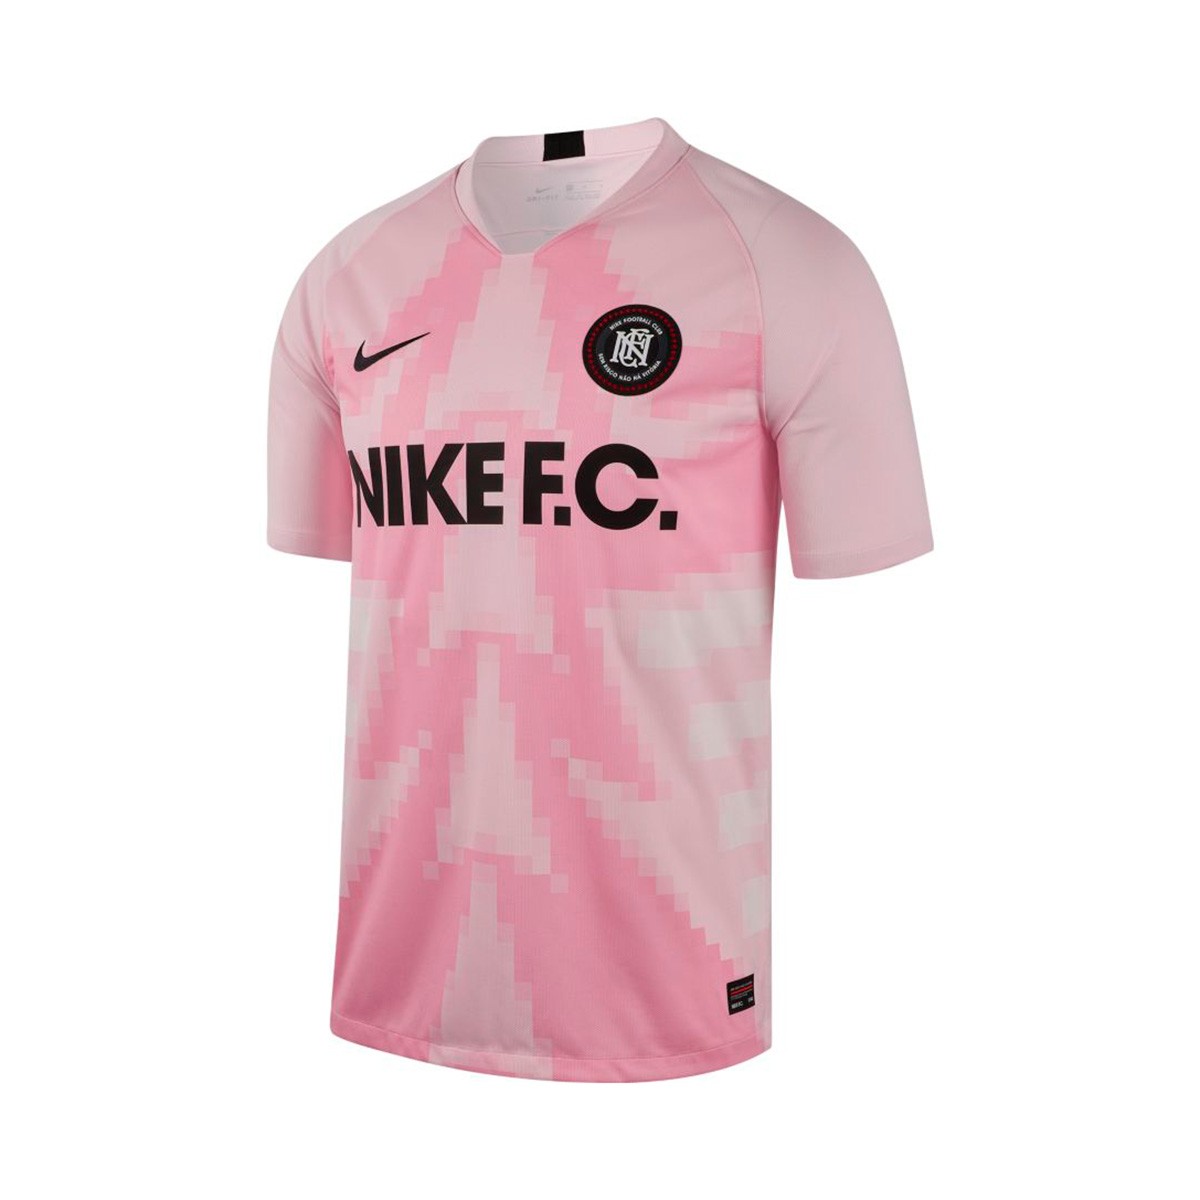 Jersey Nike Nike F.C. Pink foam-Pink 